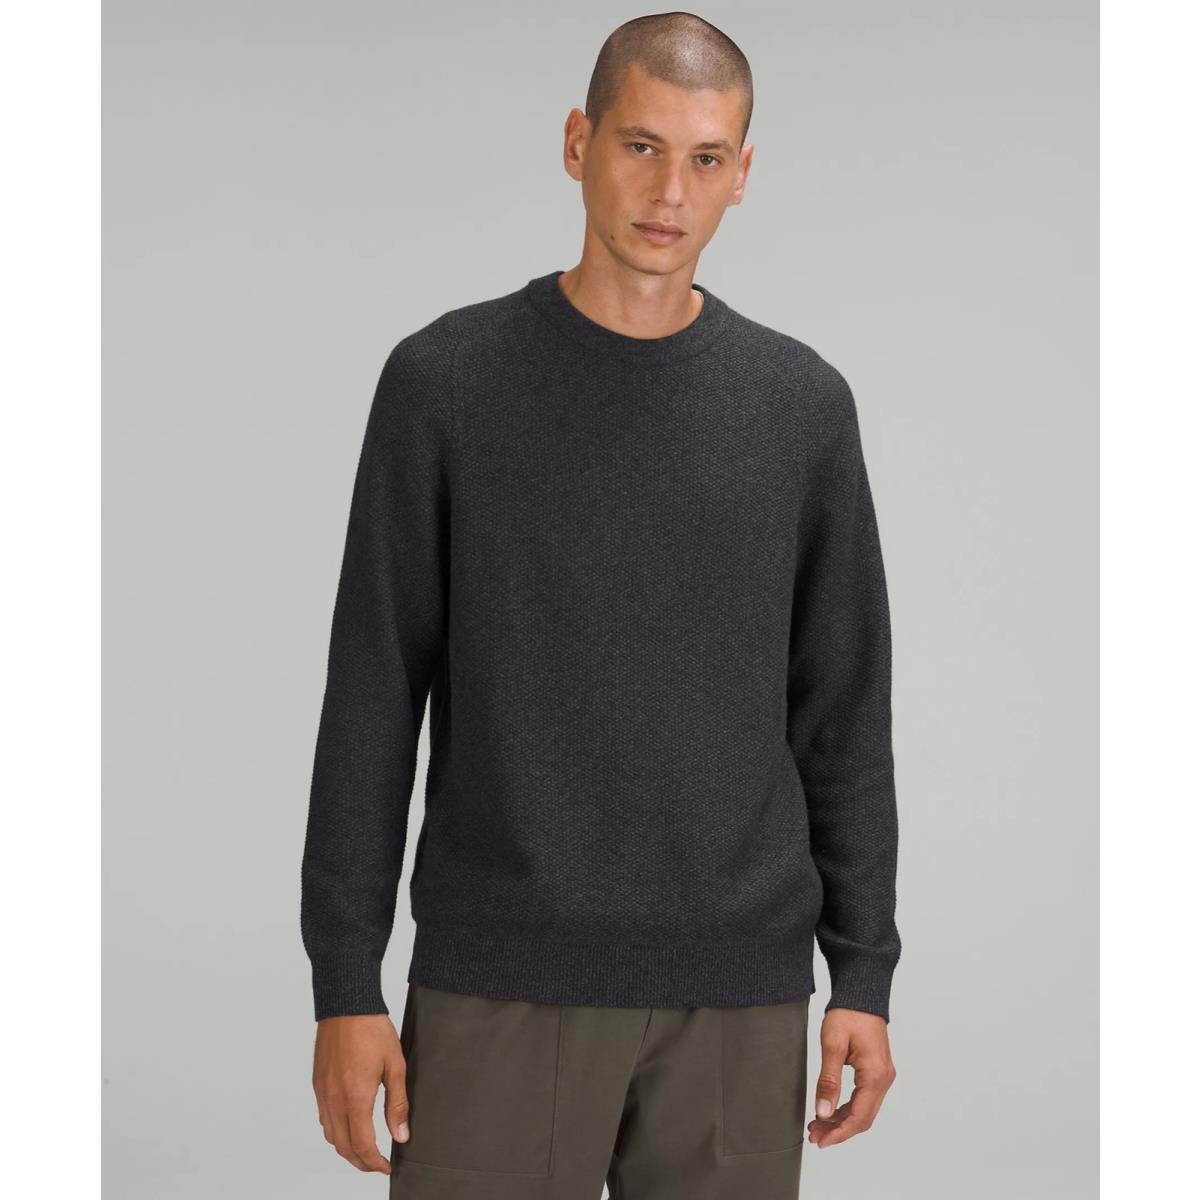 Lululemon Textured Knit Crew Sweater - Men`s Small Black Pullover